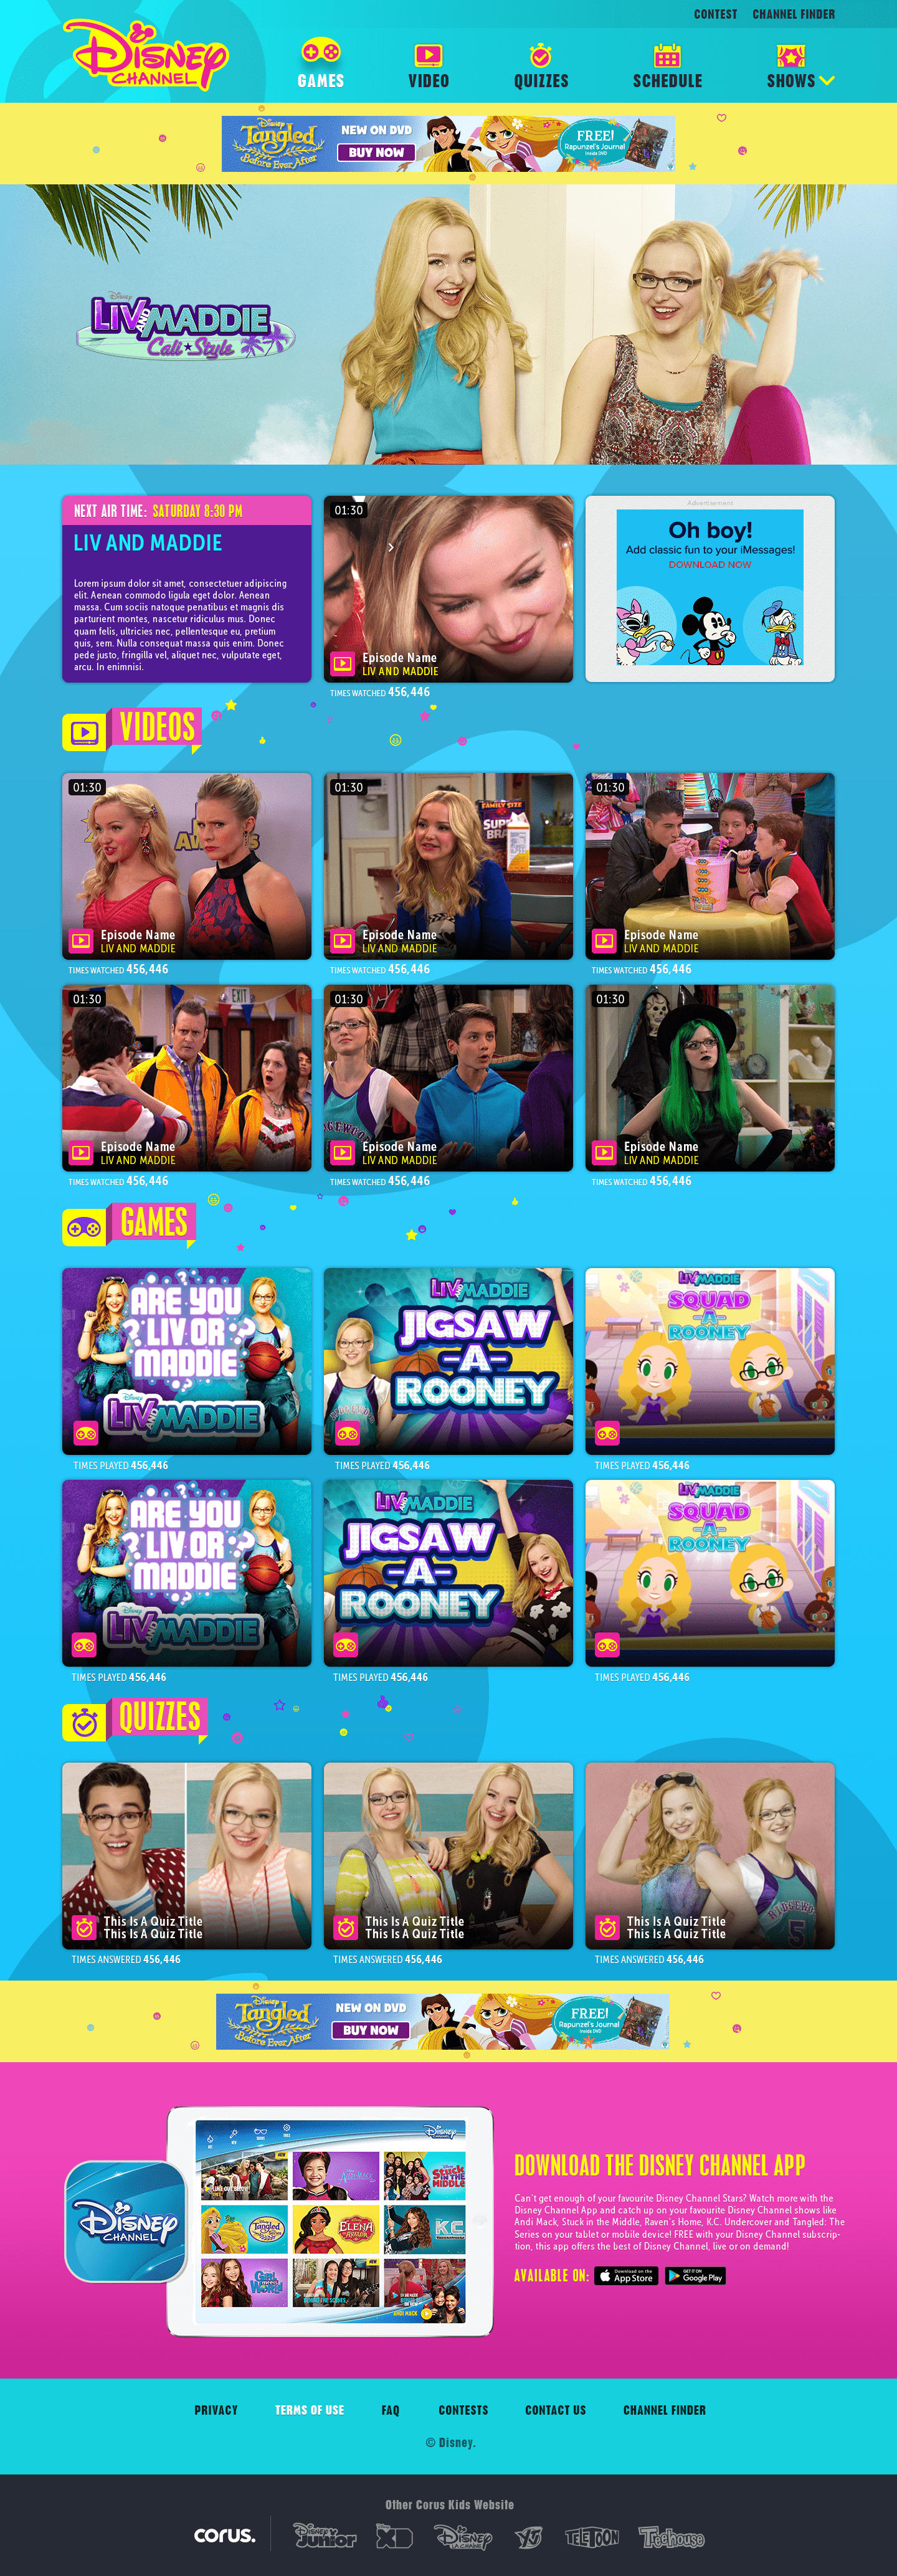 Disney Channel show details page